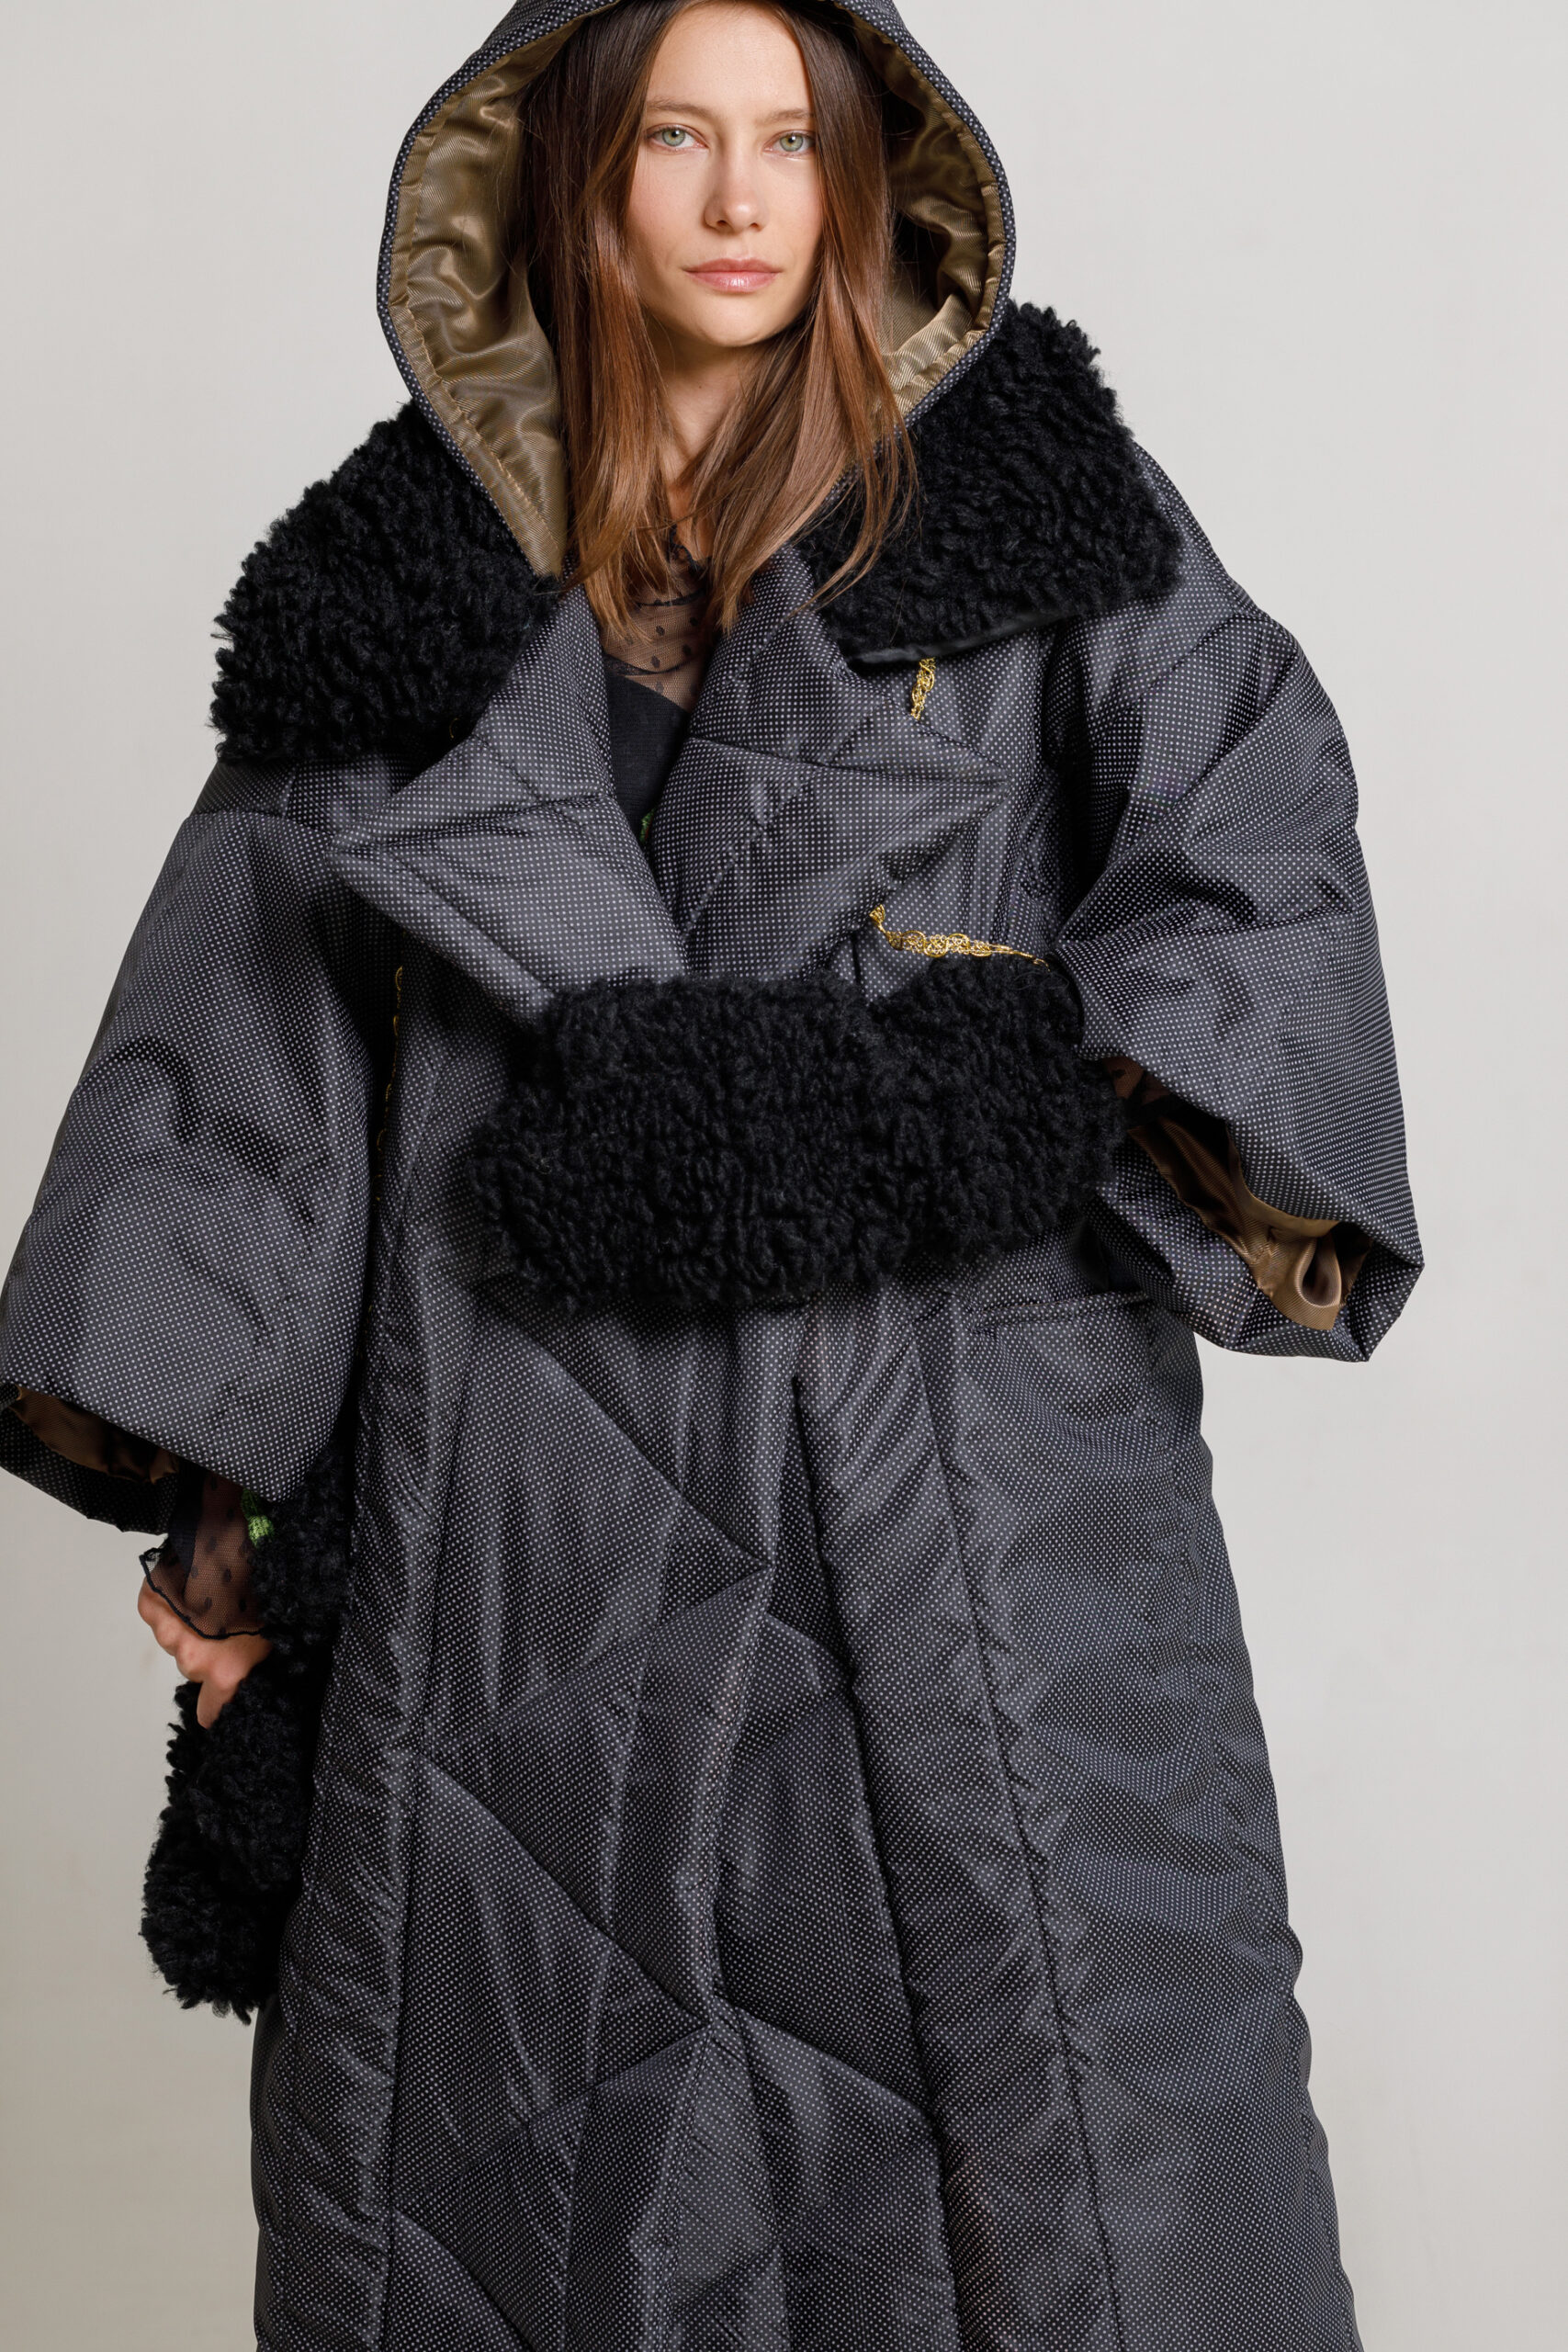 LEVI overcoat, oversized synthetic fur. Natural fabrics, original design, handmade embroidery